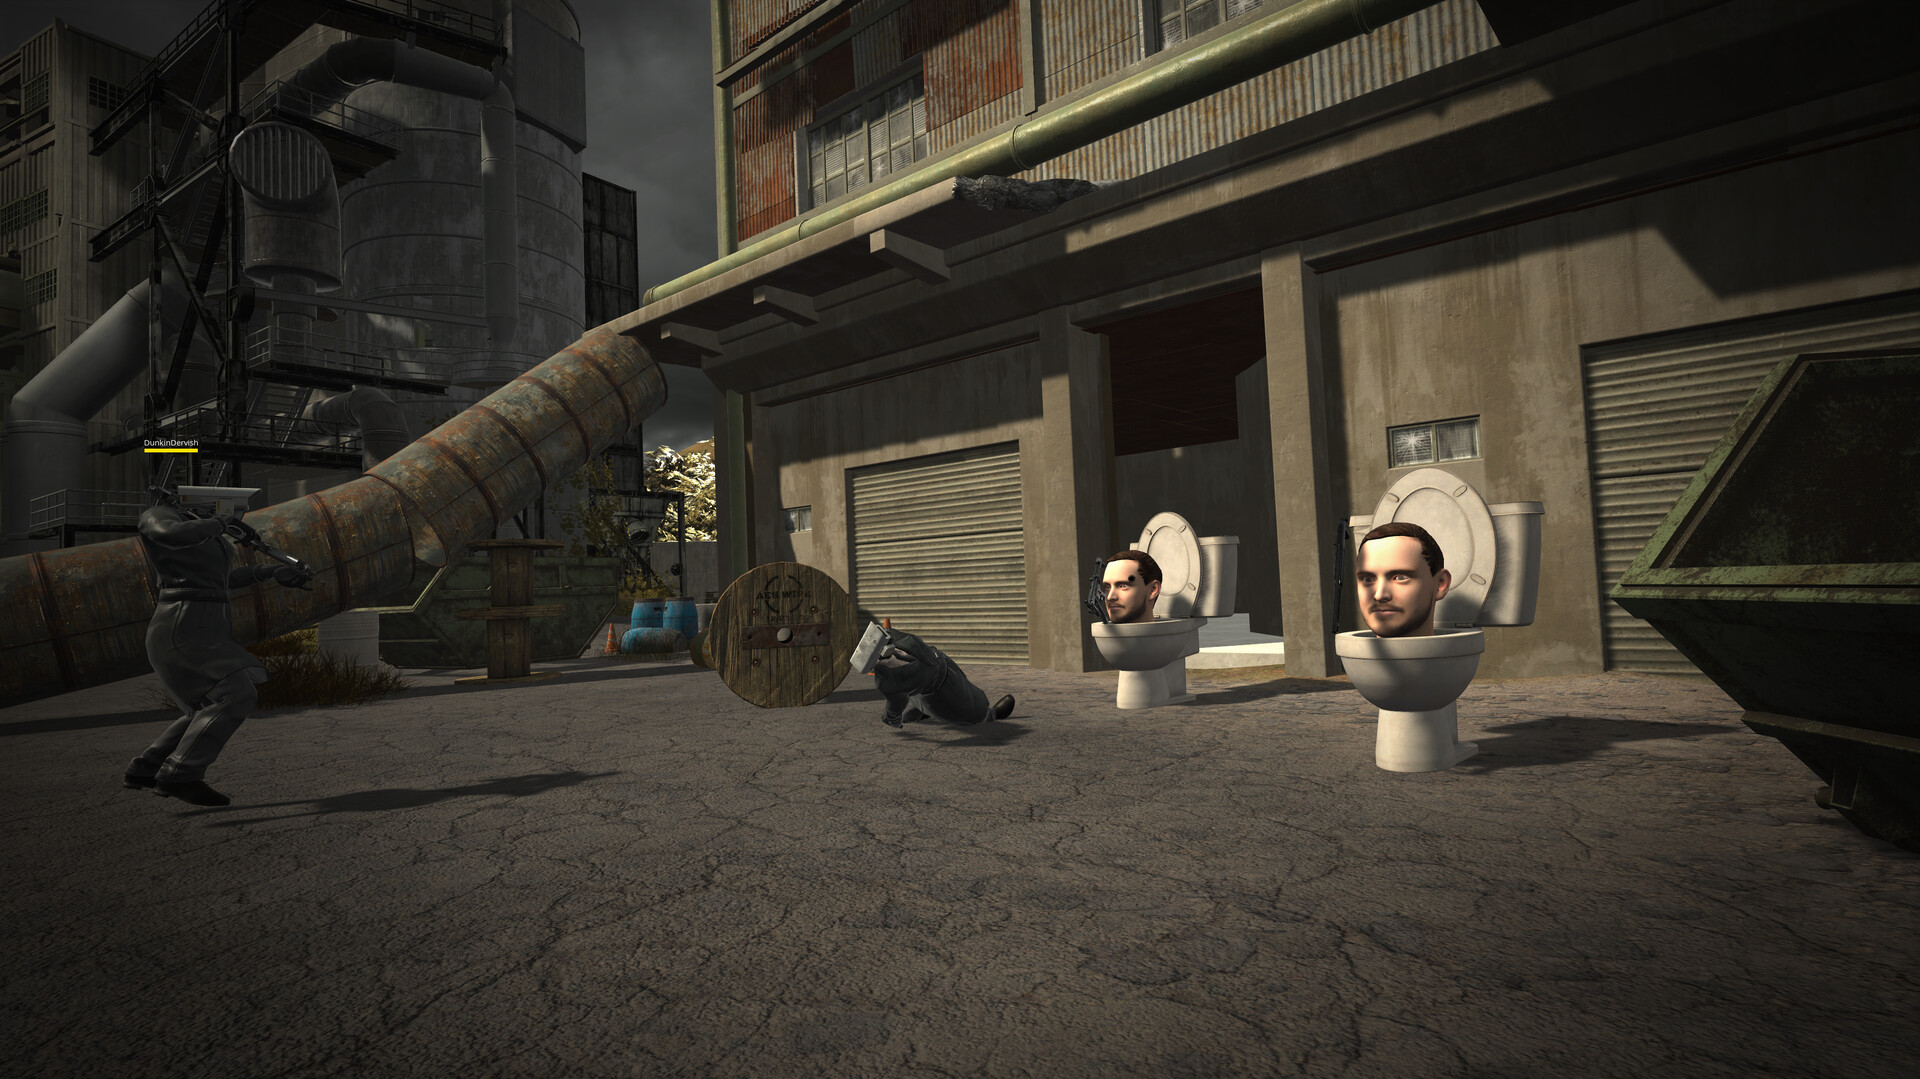 Skibidi Battle - Toilets Attack on Steam